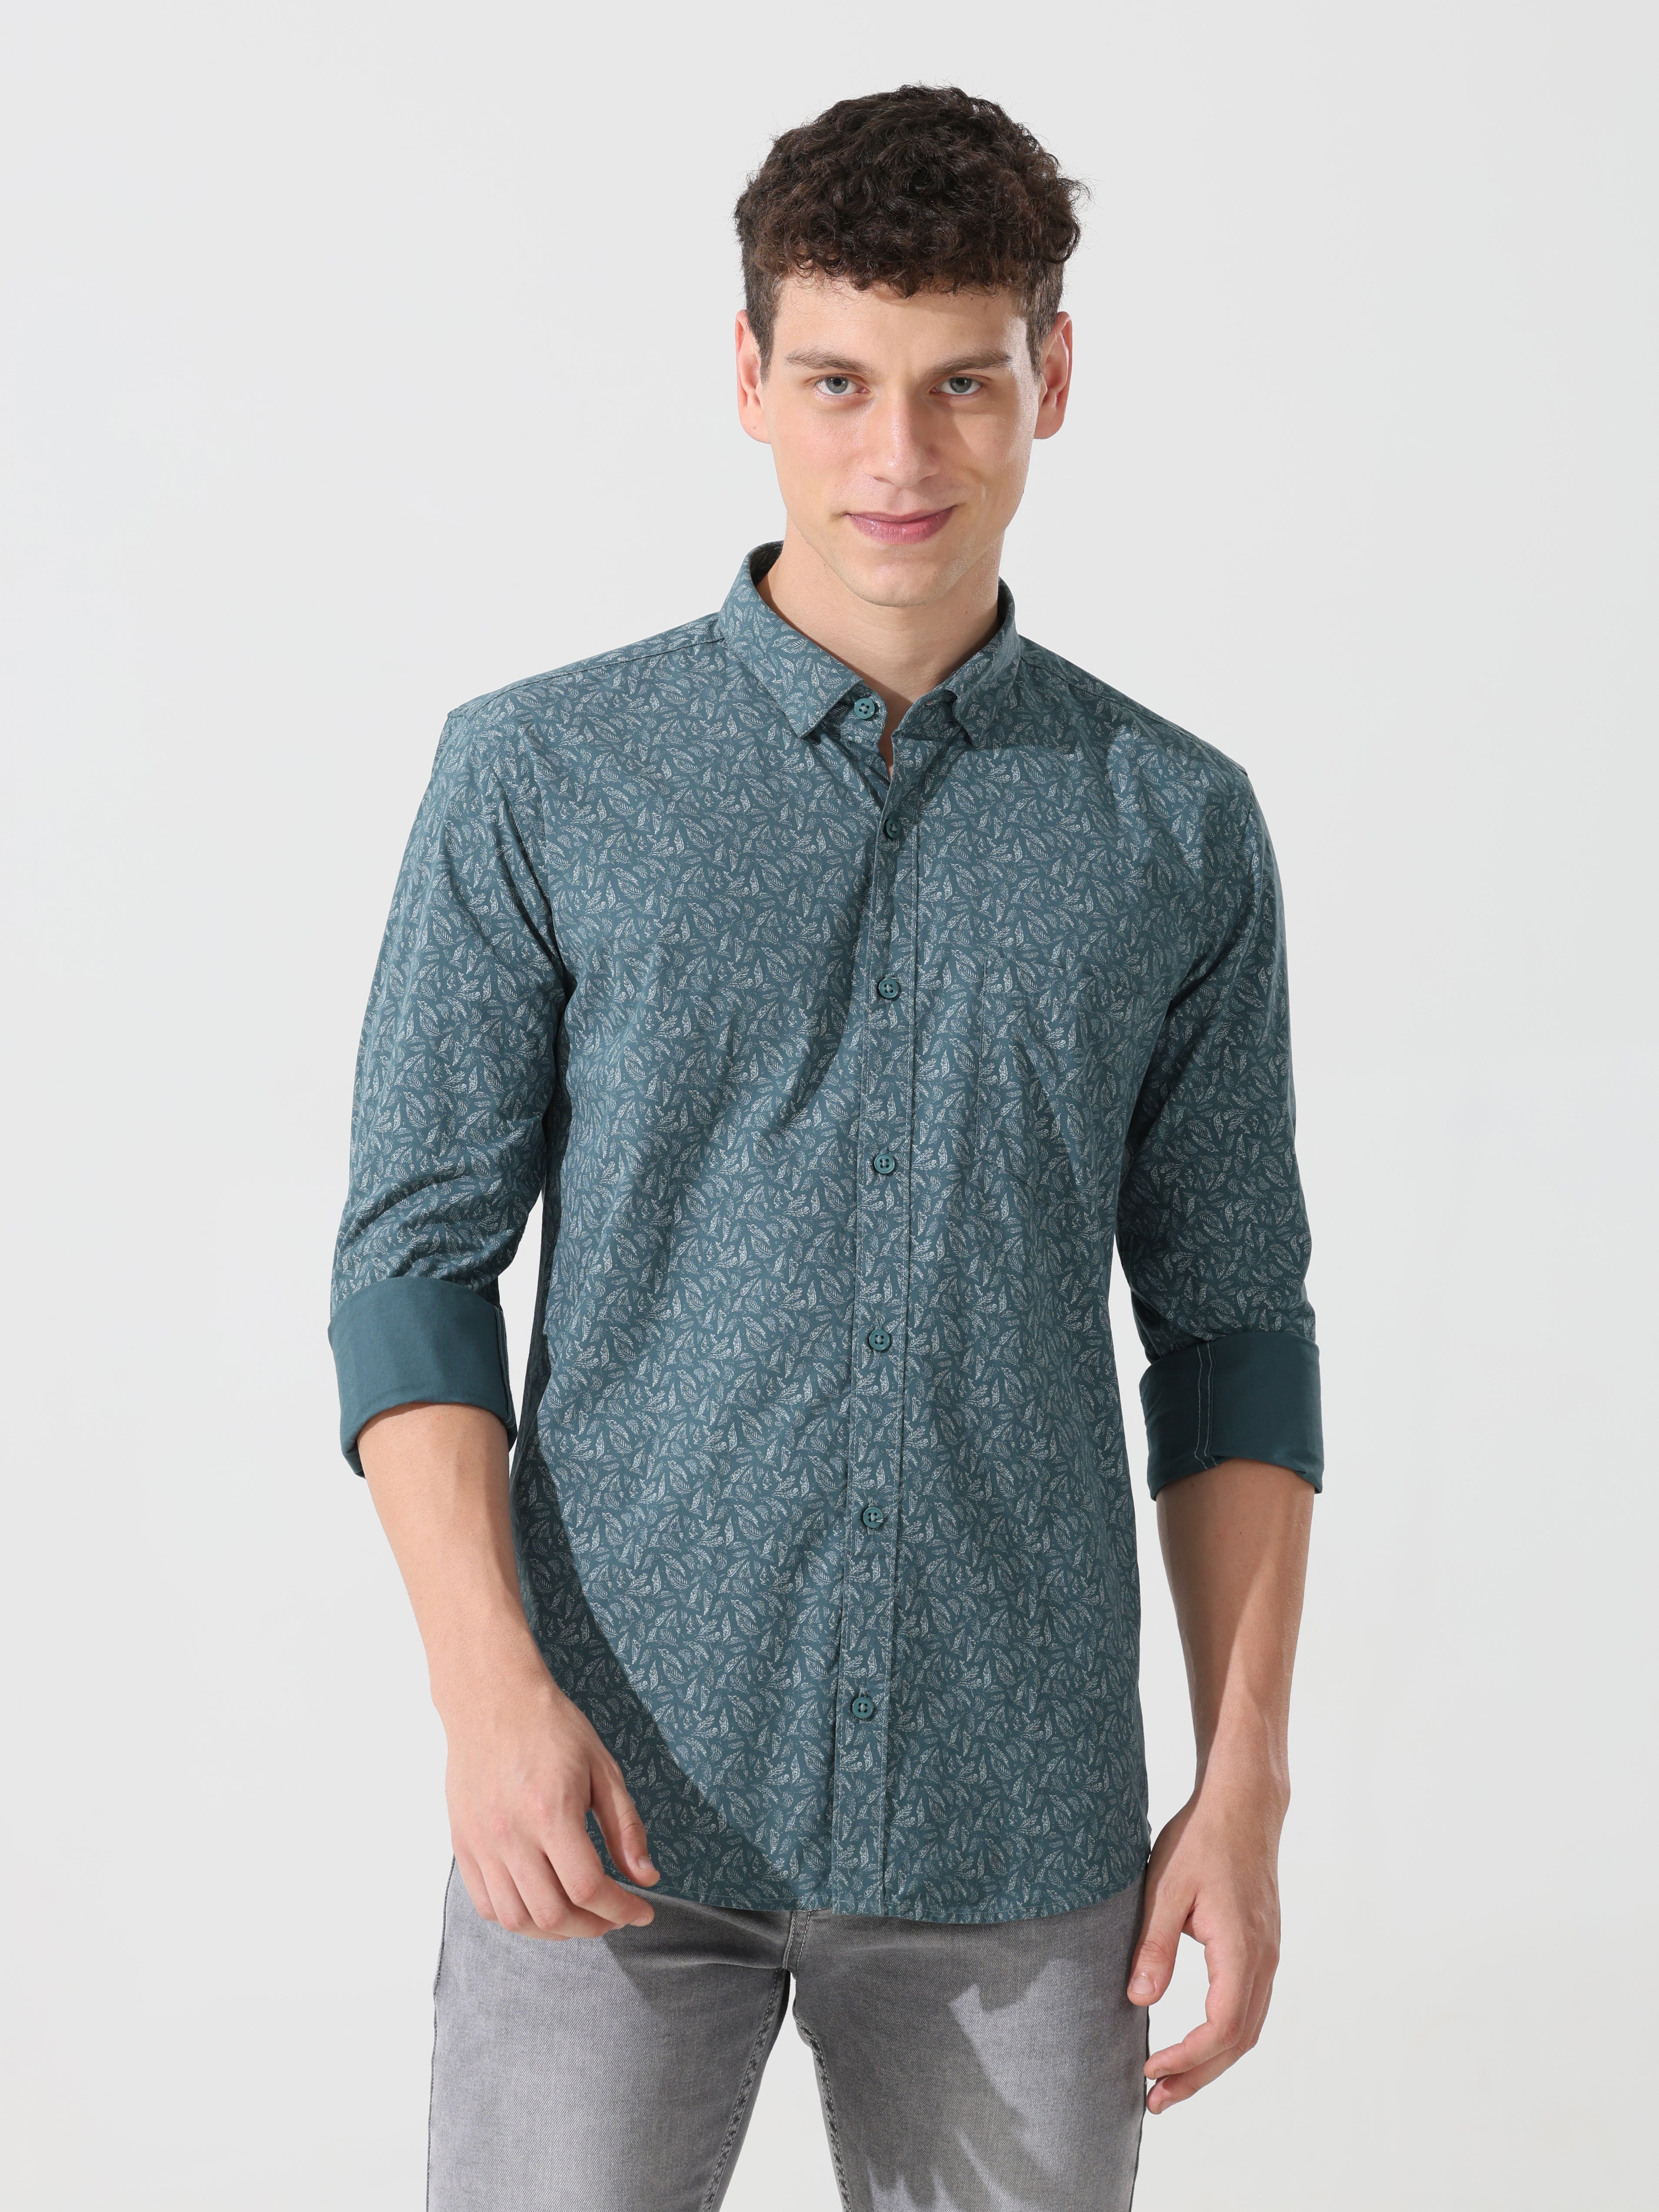 Shaded Spruce printed slim fit shirts - Address pro